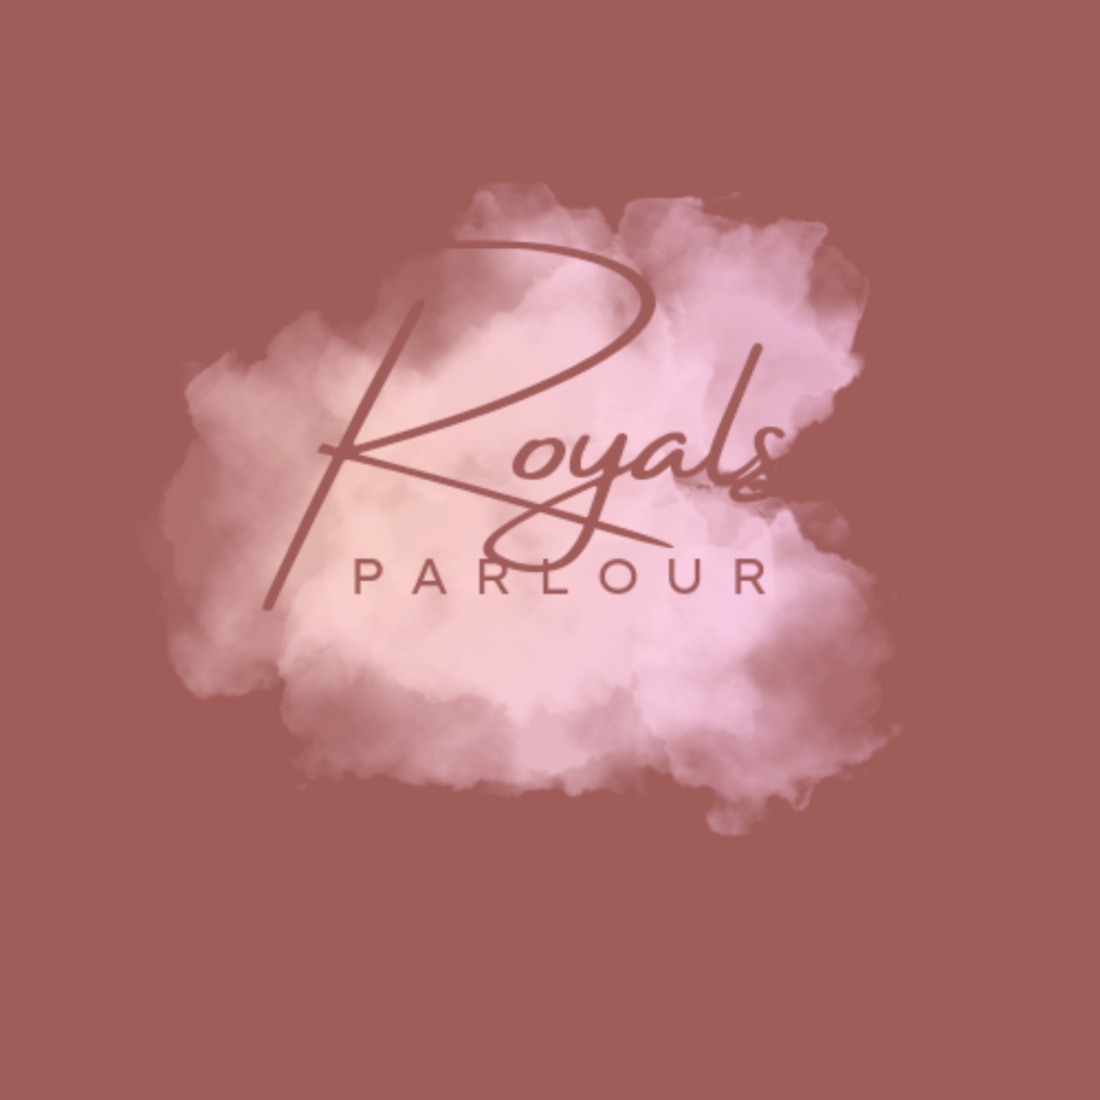 Royals Parlour cover image.